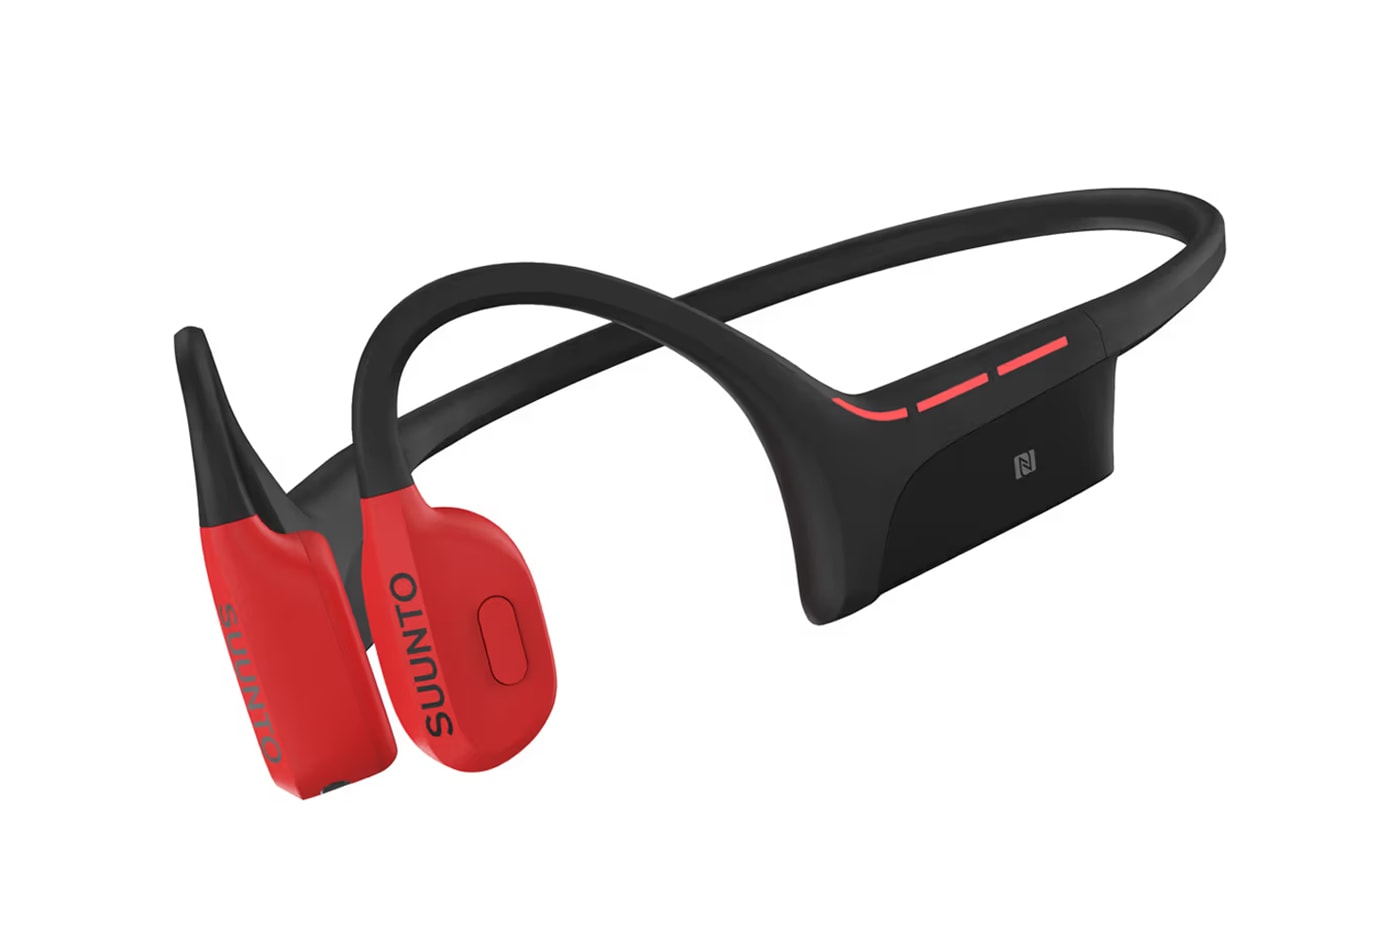 suunto wing headphones bone conduction technology over the ear open air design titanium silicone materials price specs buy